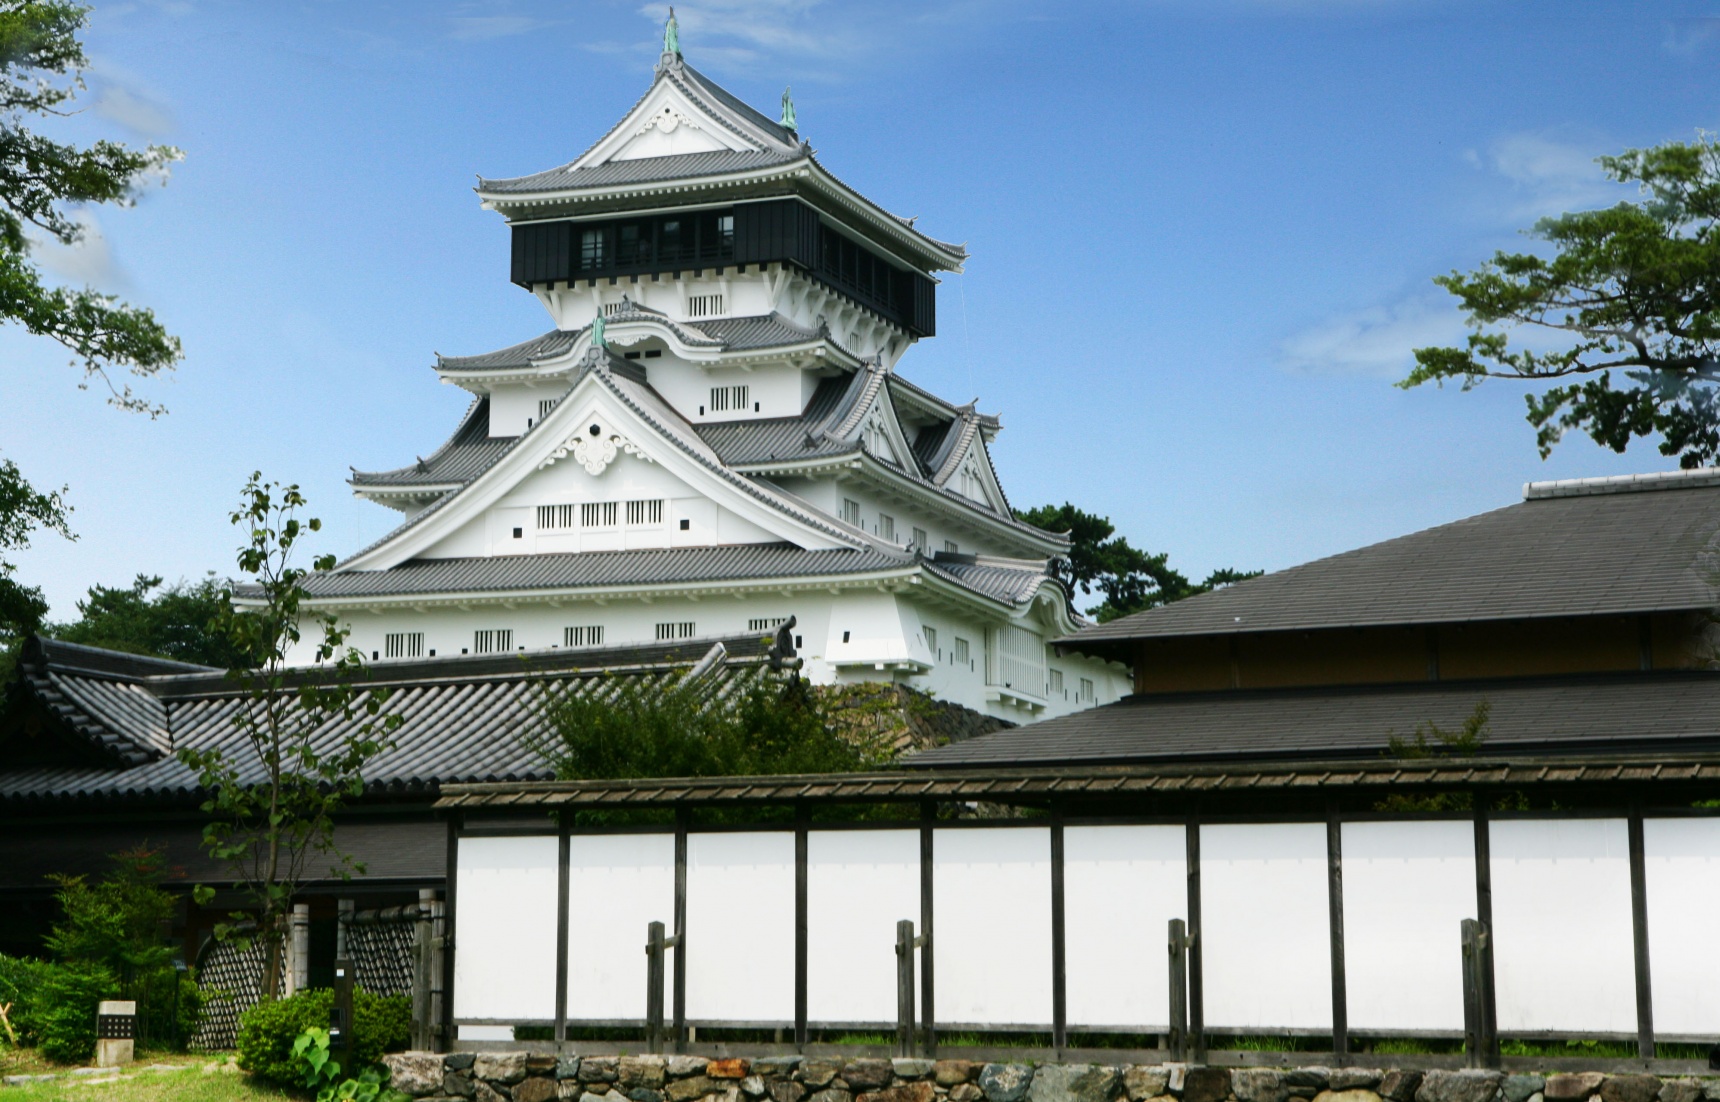 The Meiji Restoration in Kitakyushu